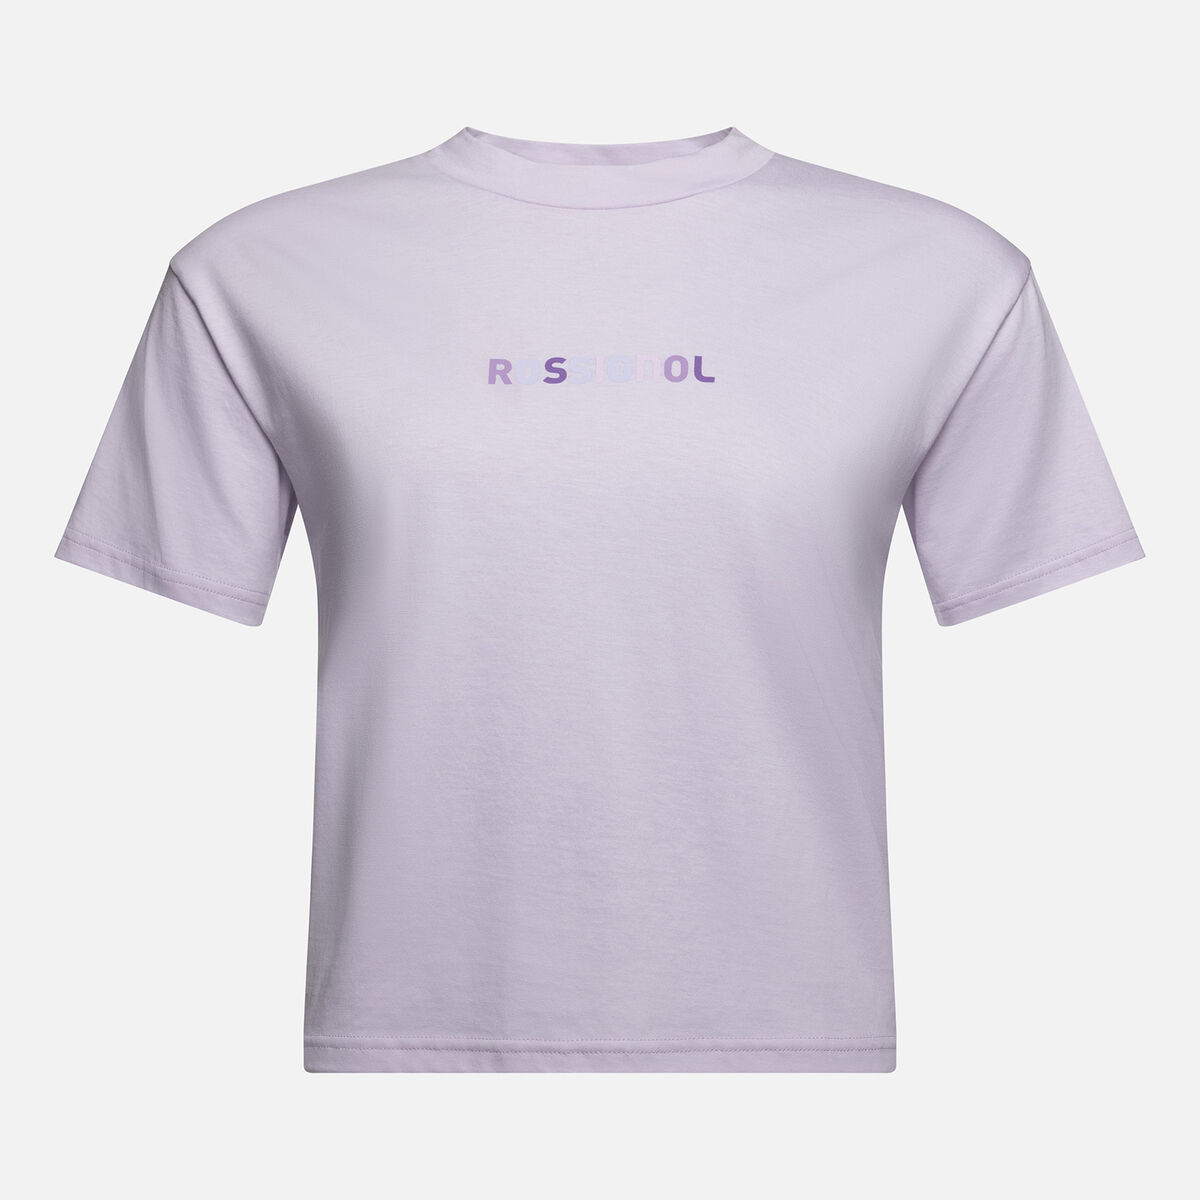 Damen-T-Shirt mit Print